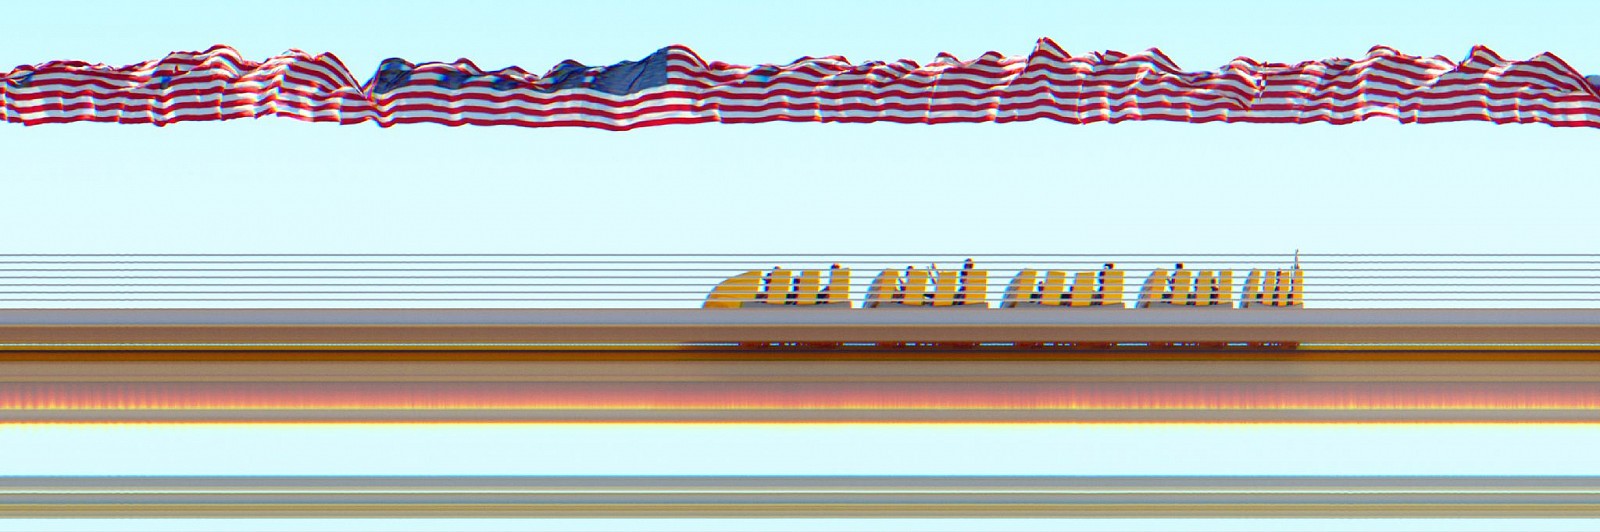 Jay Mark Johnson, SANTA MONICA ROLLER COASTER 3, 2007 Santa Monica CA
archival pigment on paper, mounted on aluminum, 40 x 120 in. (101.6 x 304.8 cm)